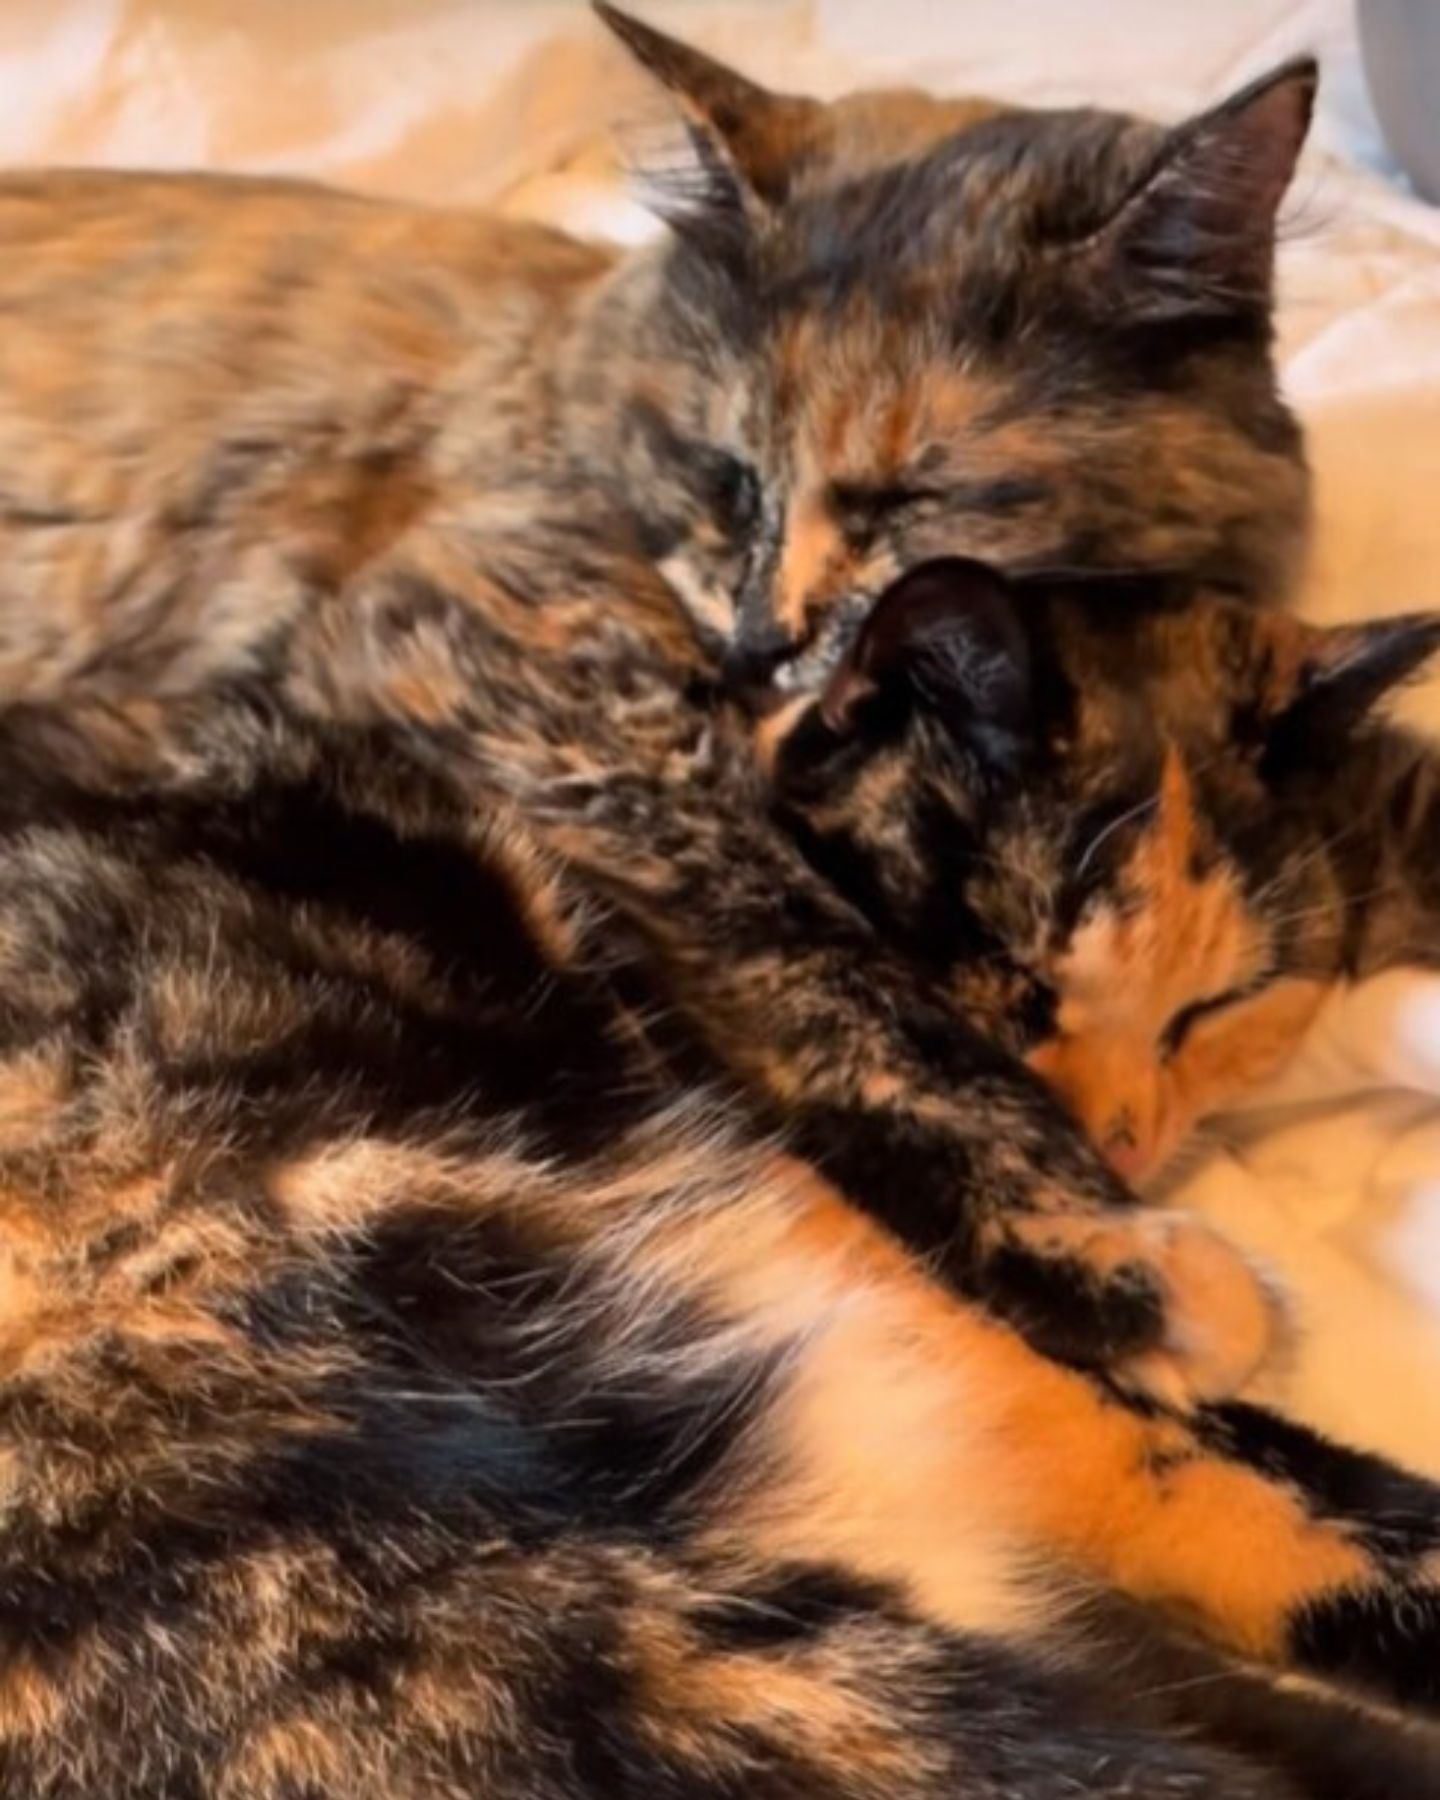 close-up photo of sister cats sleeping